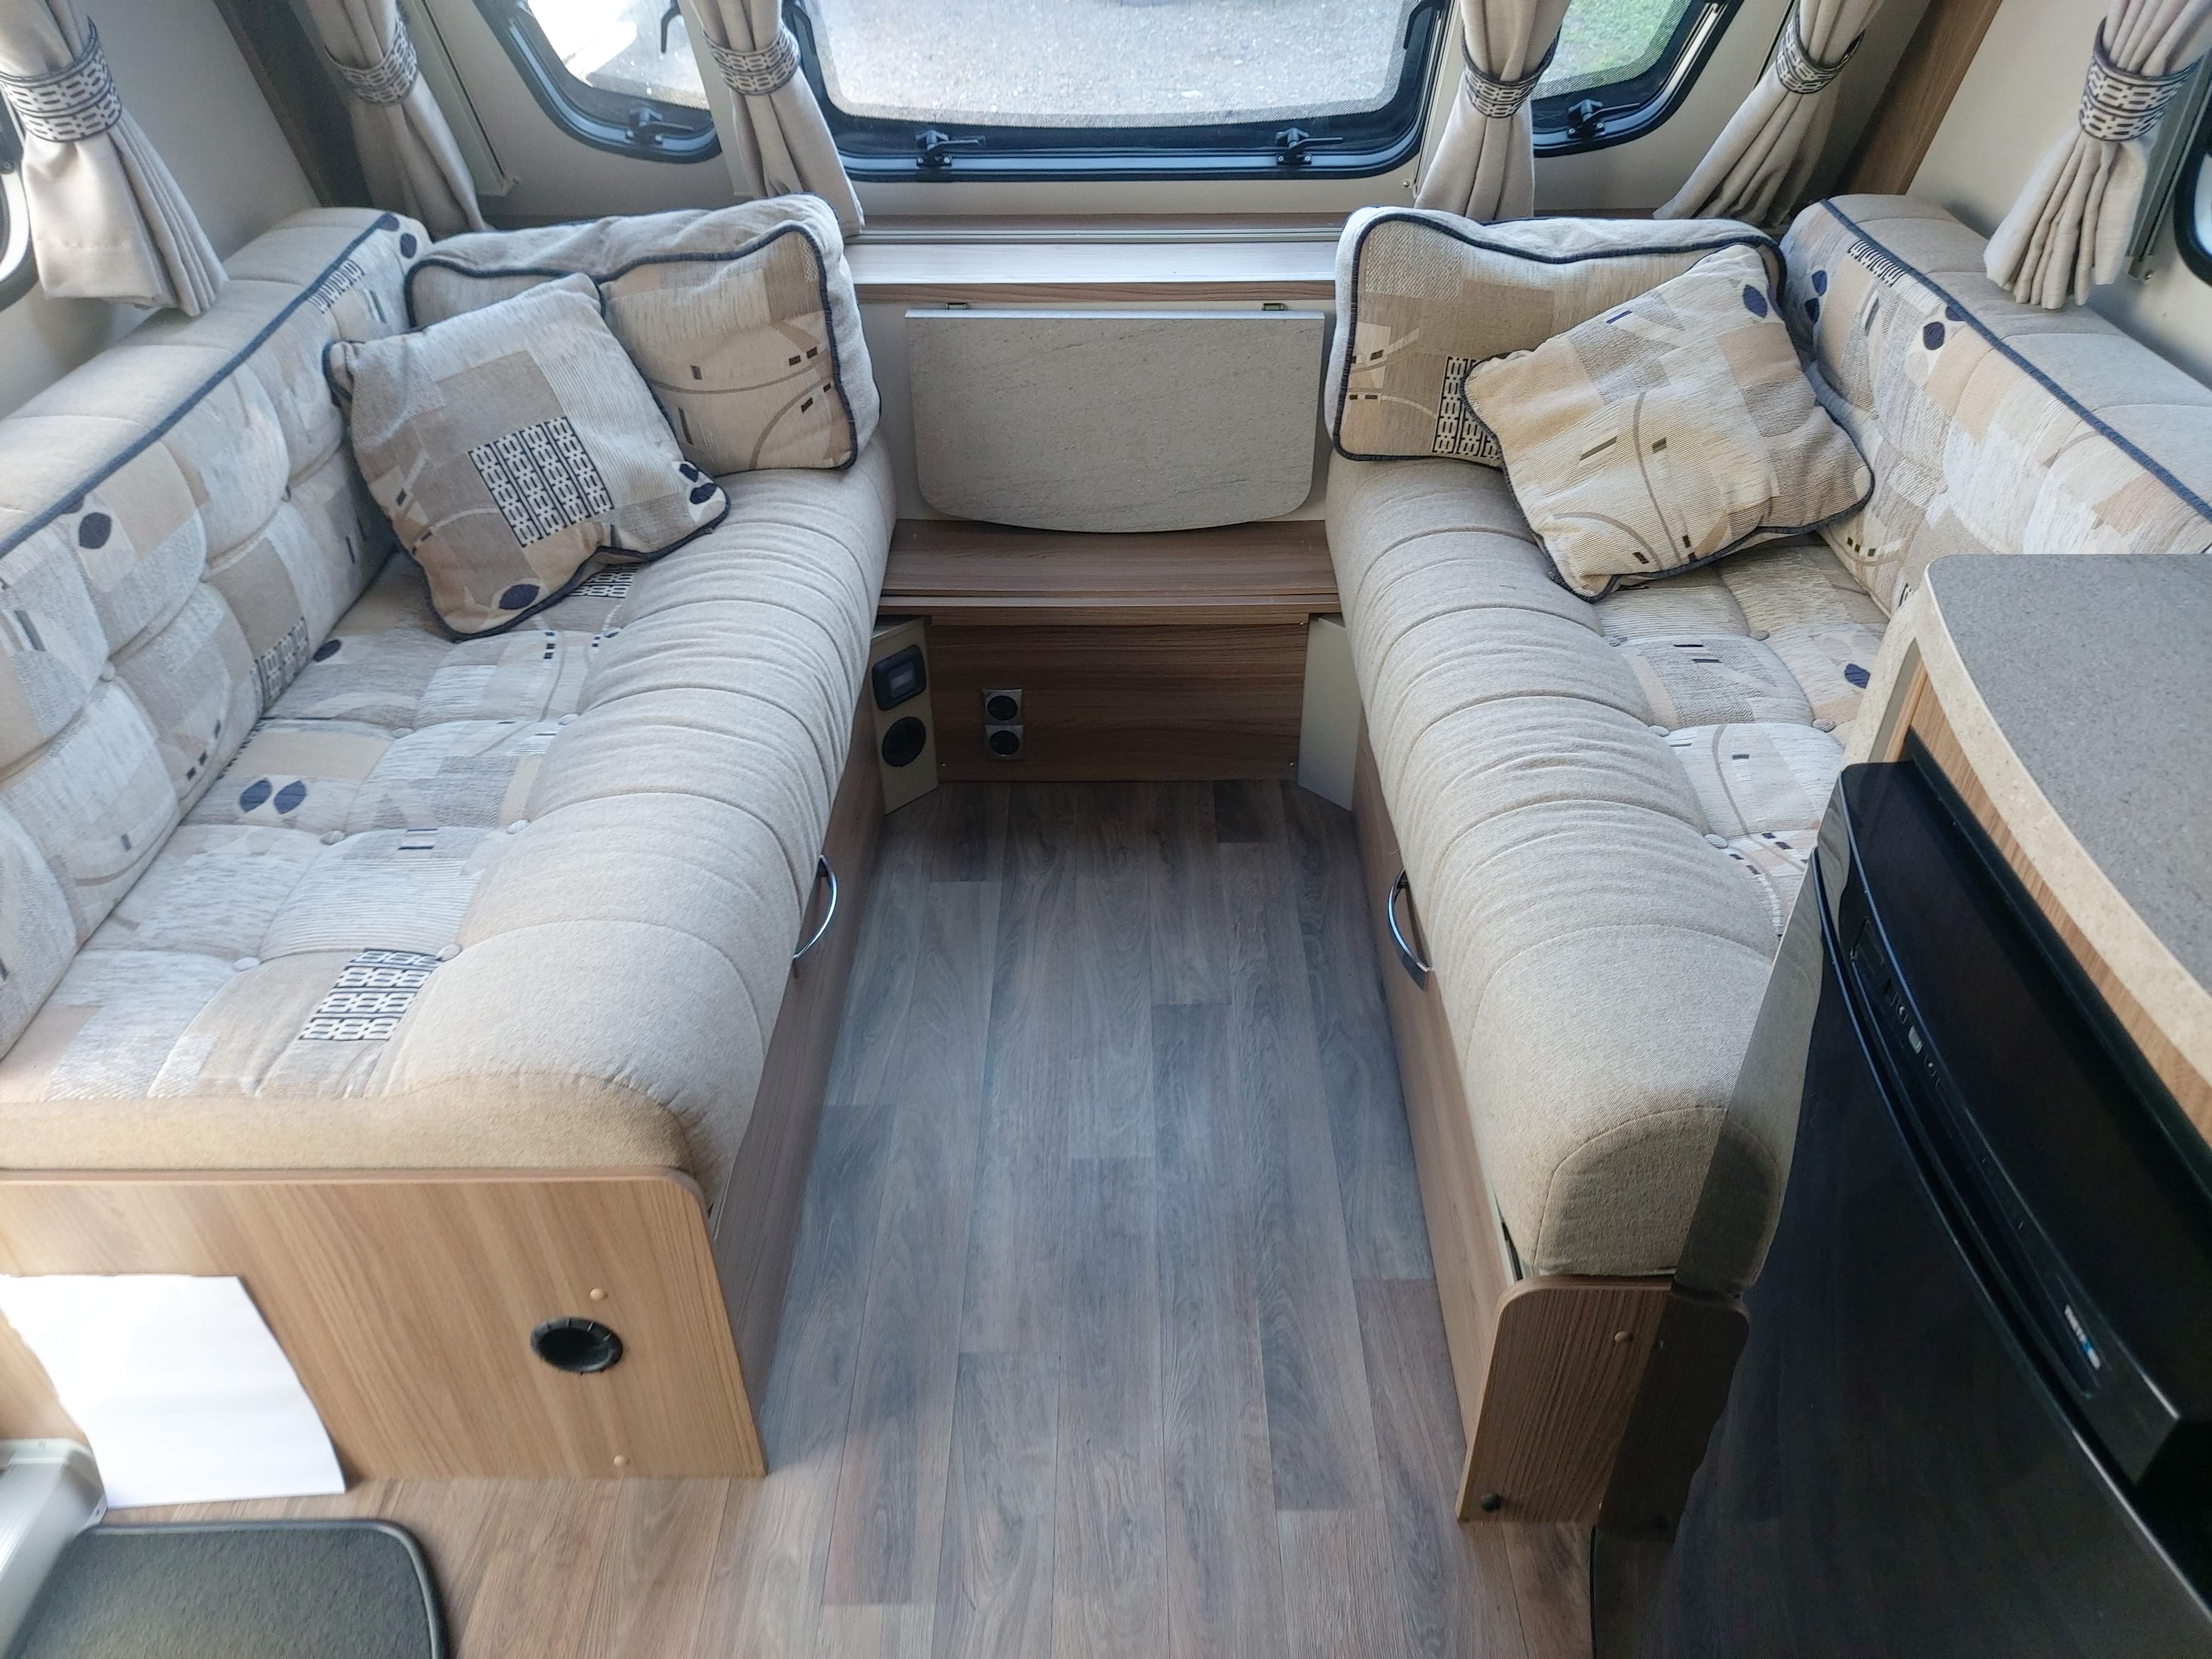 2016 Swift Lifestyle 4, 4 Berth Fixed Bed Caravan, Solar Panel, Motor Mover, Electric Bike Rack